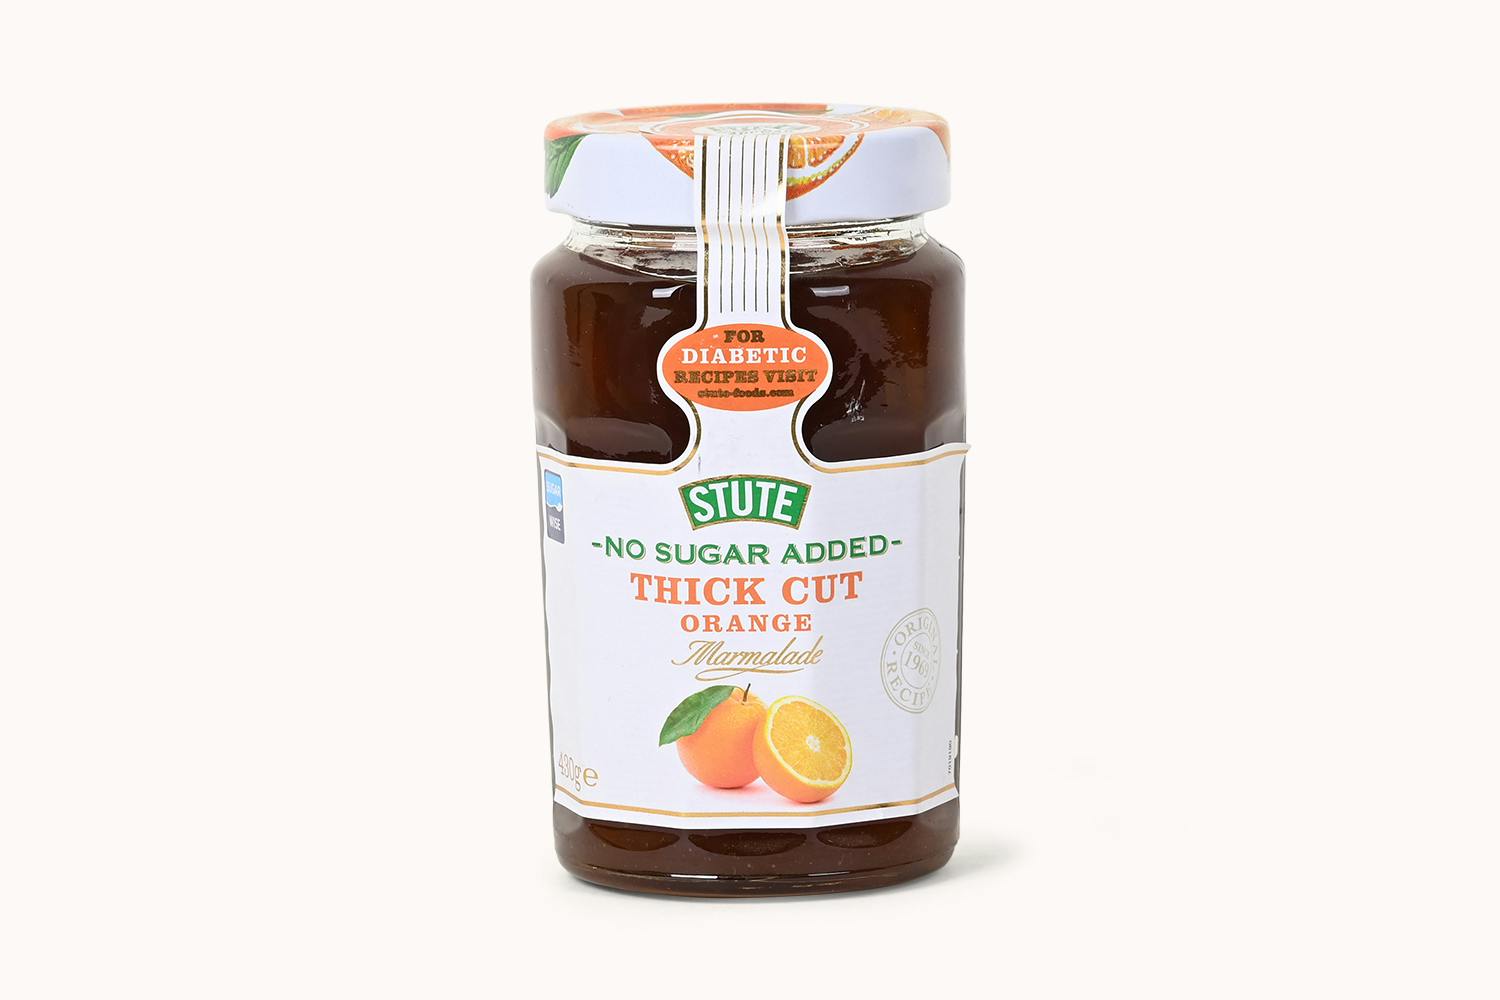 Stute Fine Cut Orange Marmalade - No Sugar Added